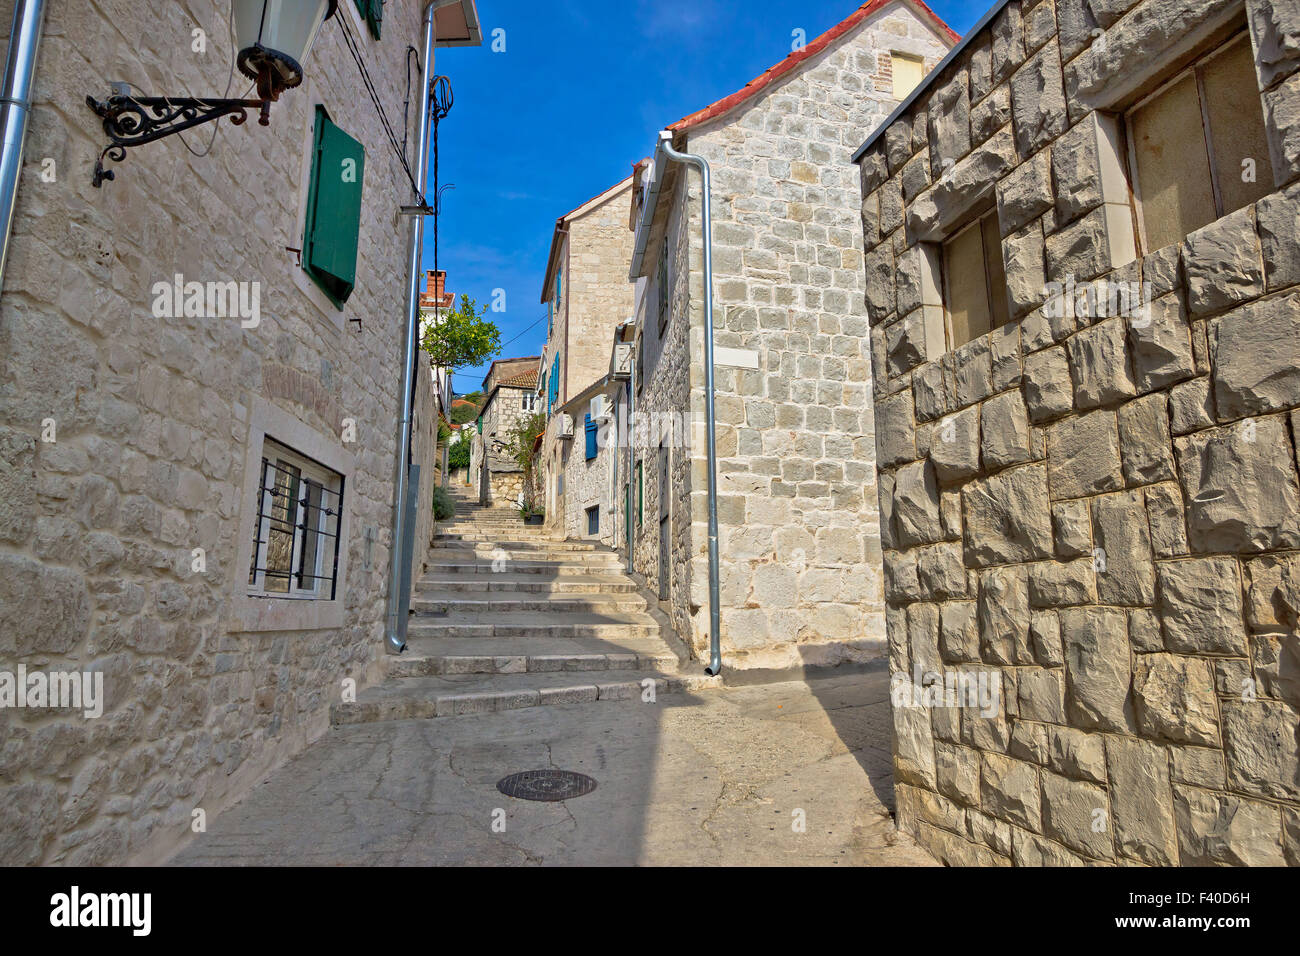 Split old historic stone street Stock Photo